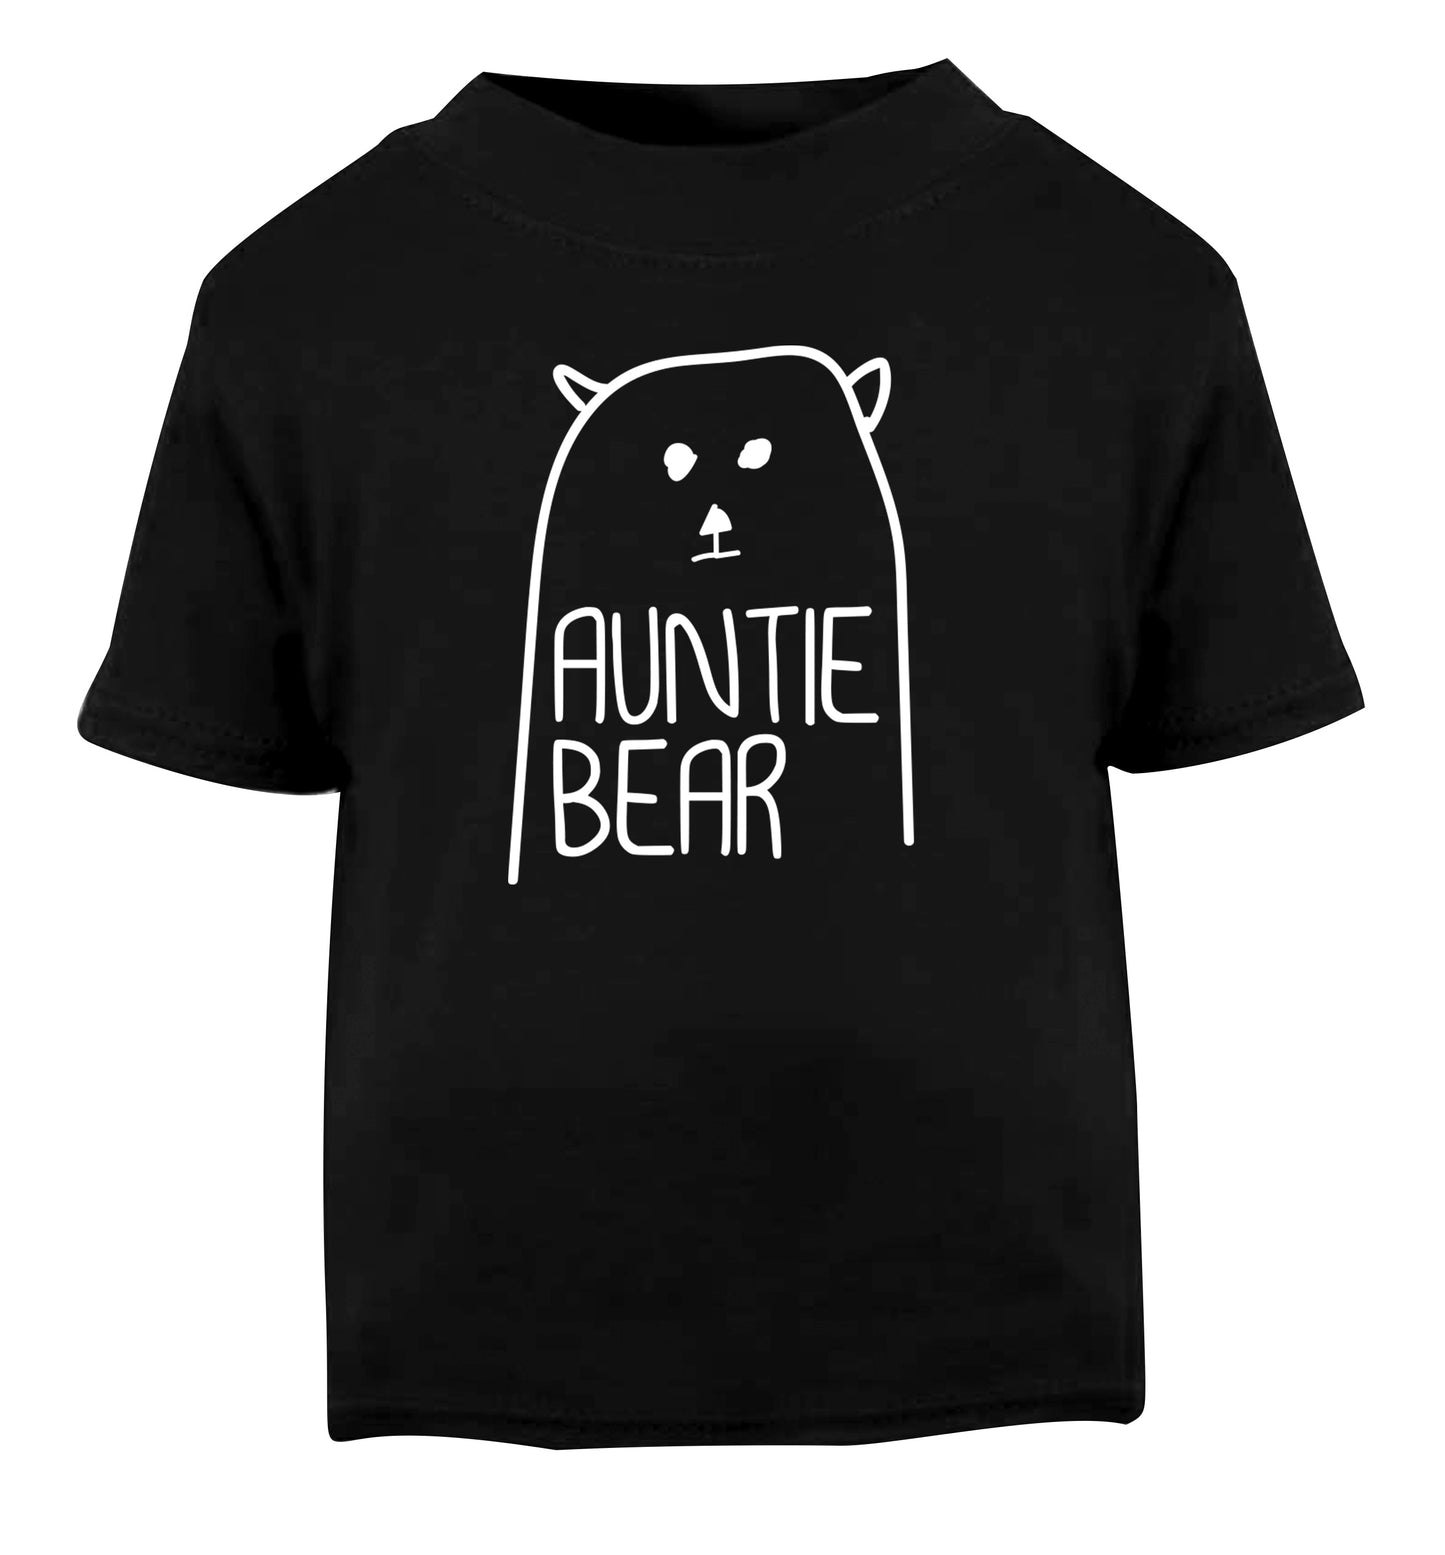 Auntie bear Black Baby Toddler Tshirt 2 years